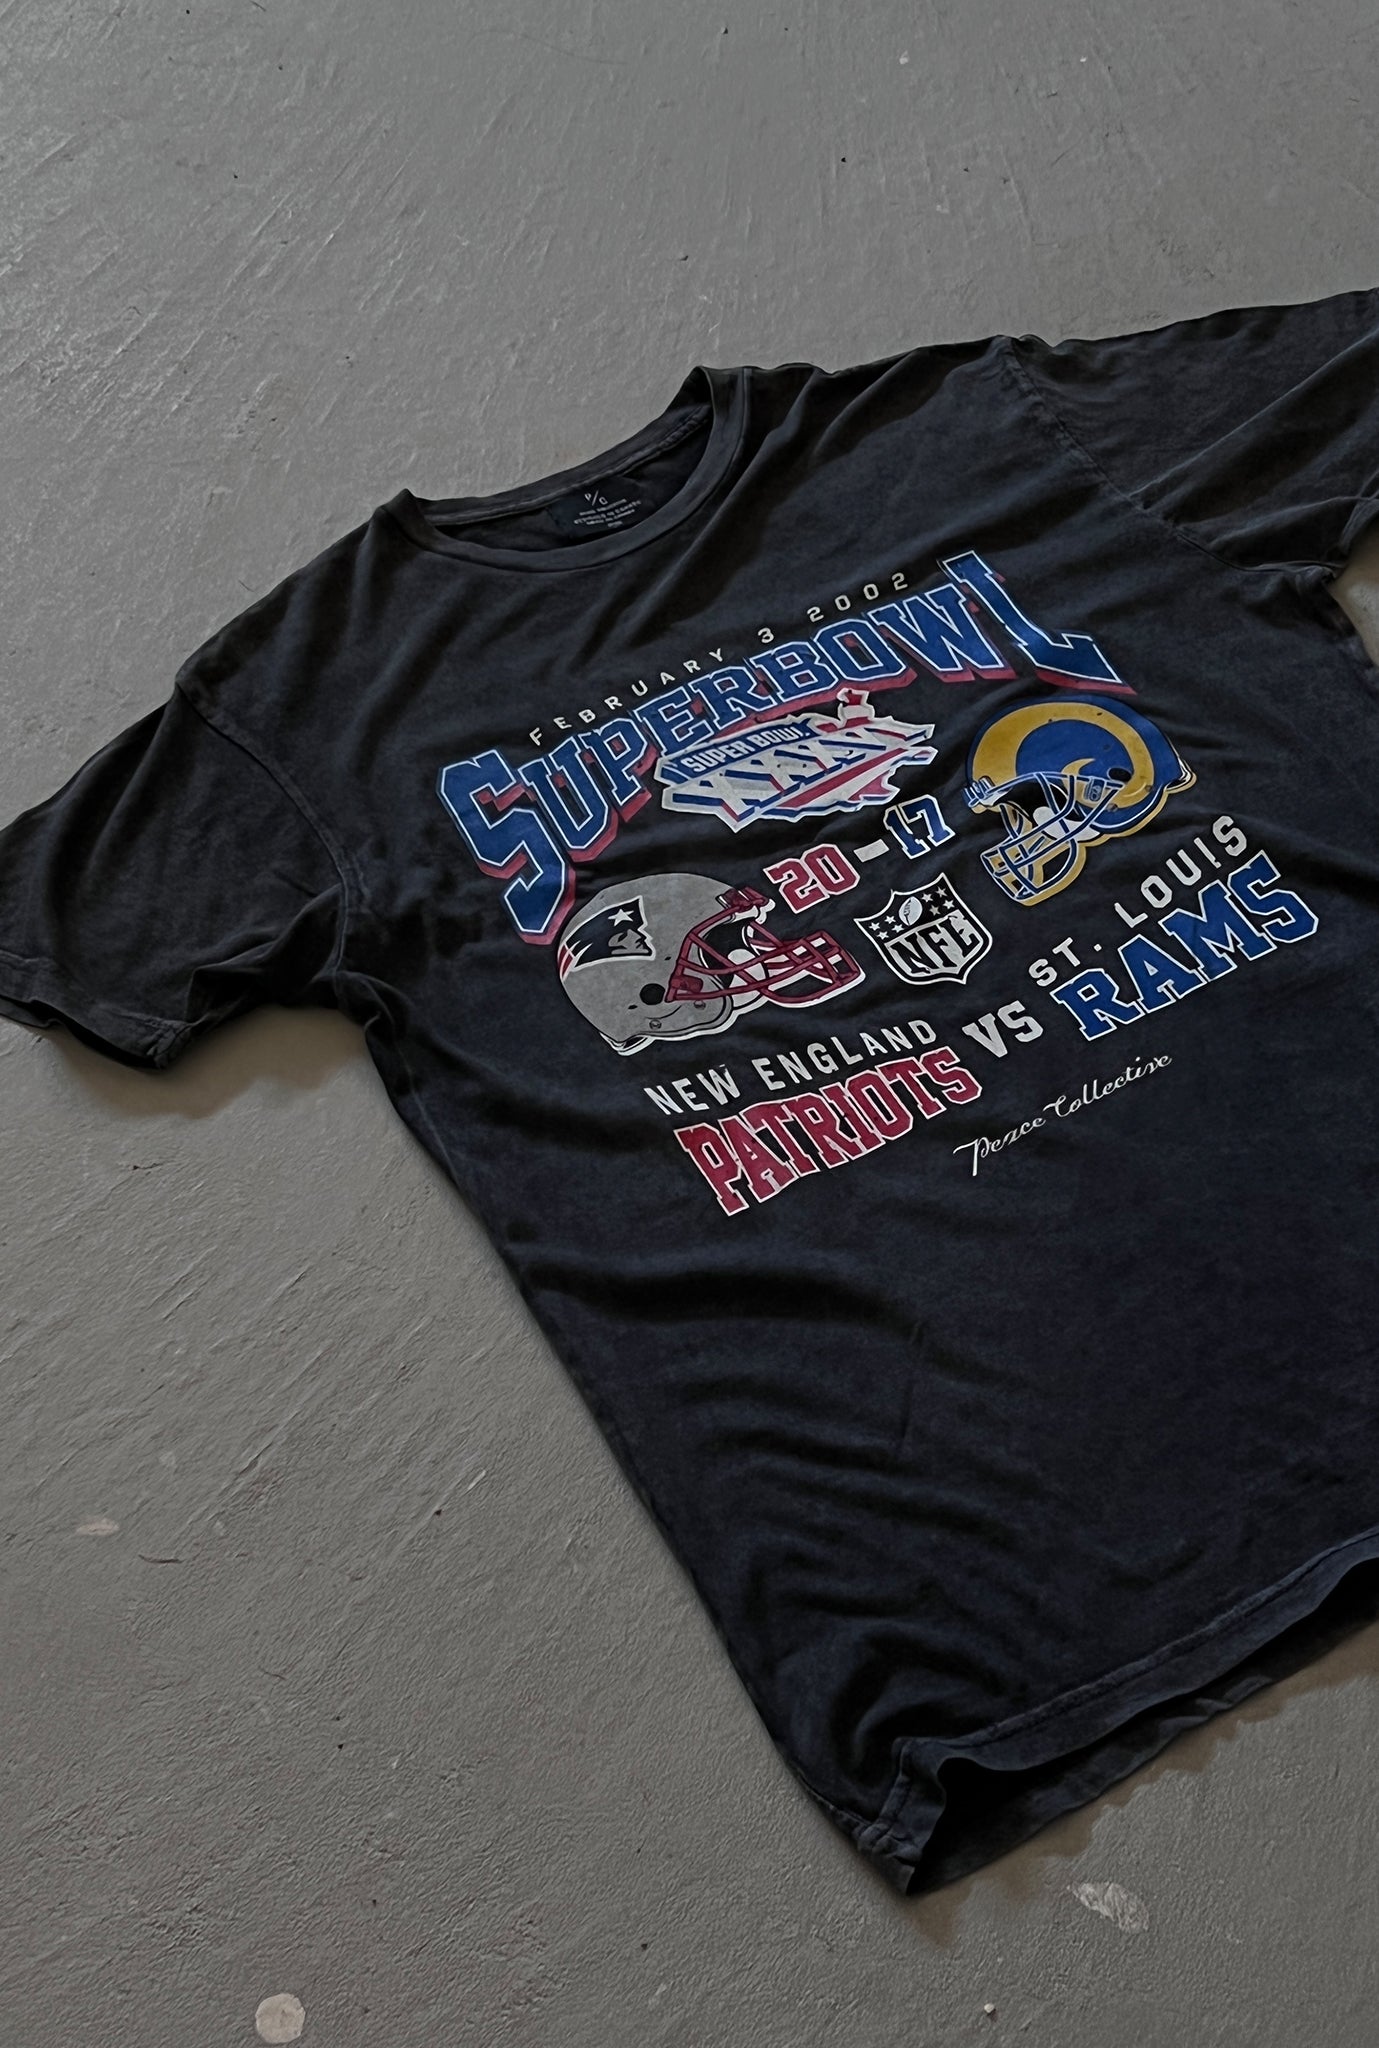 Super Bowl XXXVI: New England Patriots vs St. Louis Rams Stonewashed T-Shirt - Black